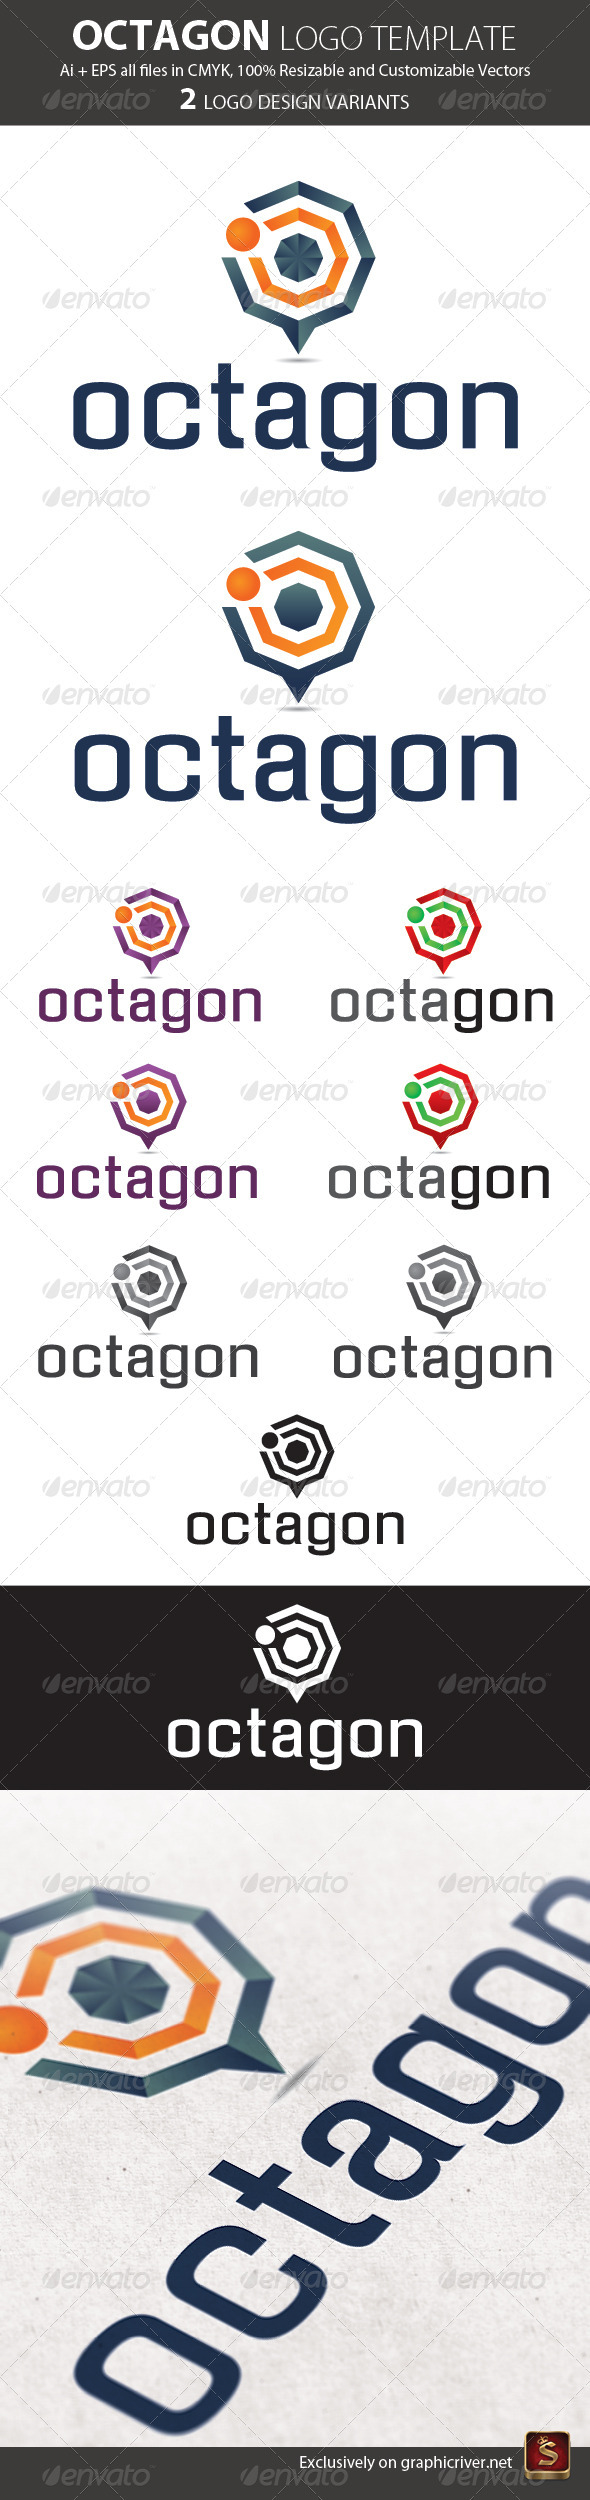 Octagon Logo Template